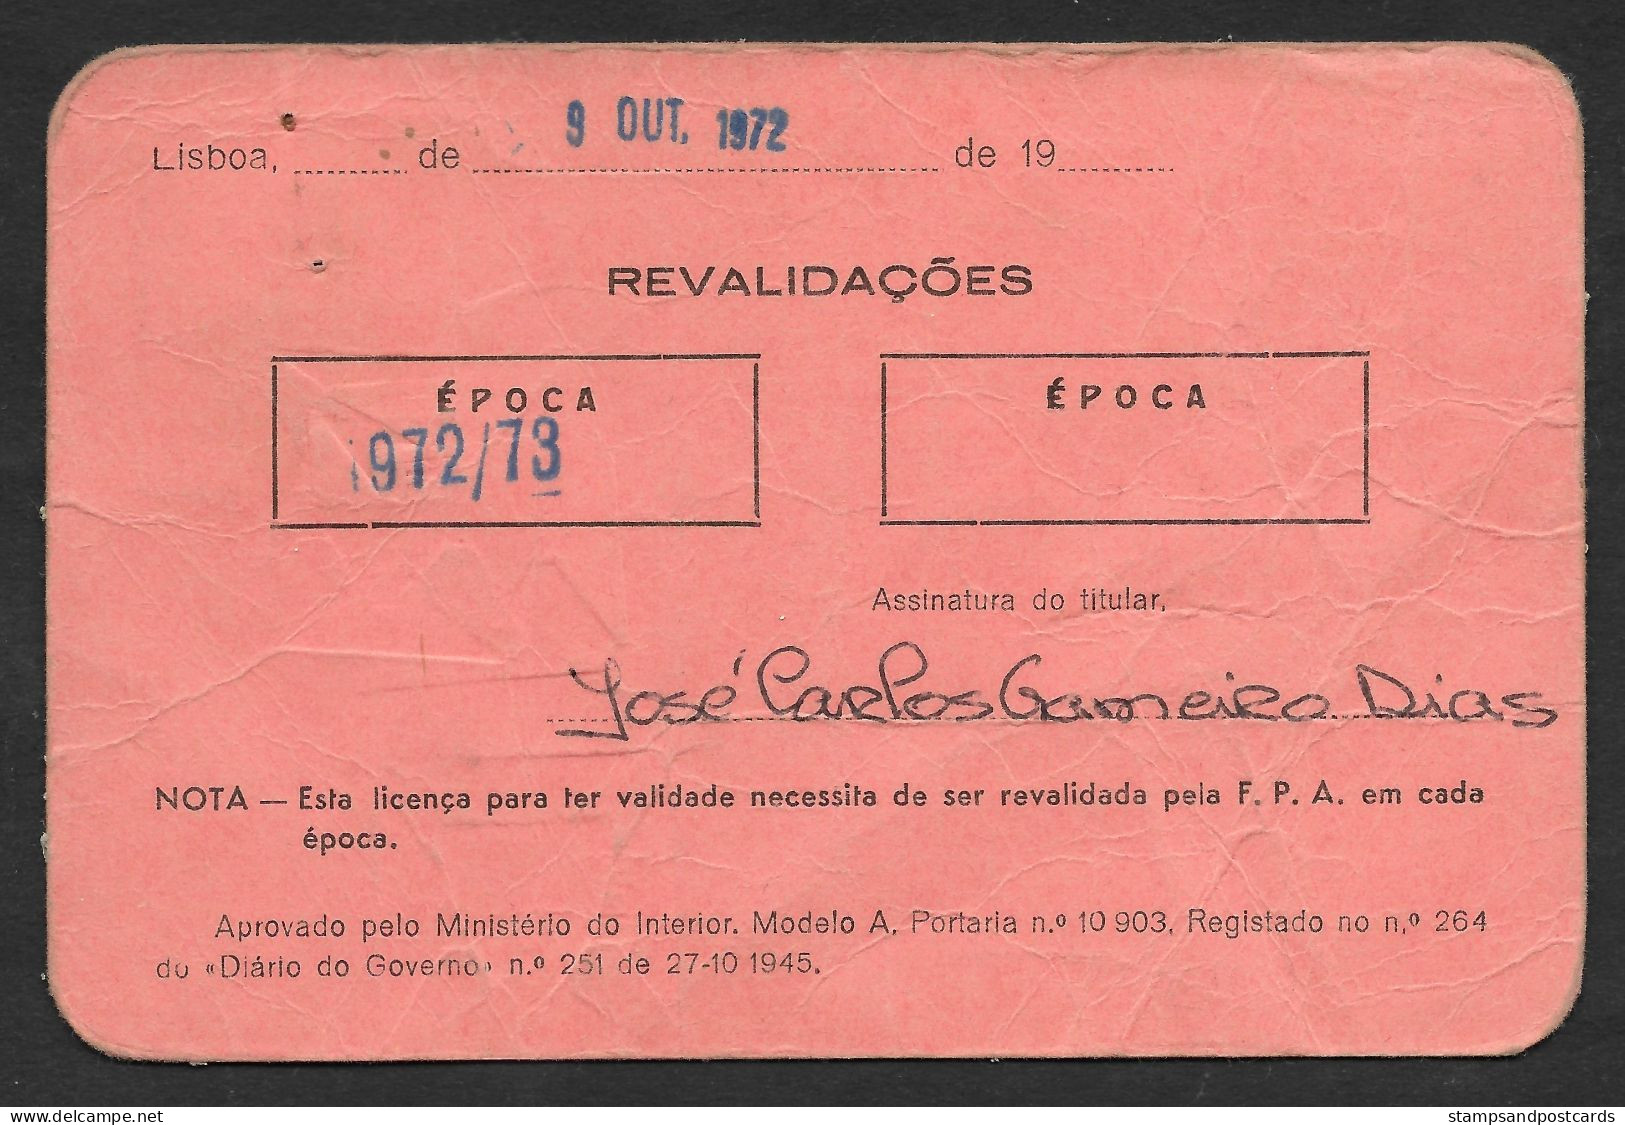 Portugal Carte Jouer Handball Junior SCP Sporting Clube De Portugal 1971 Official ID Card Handball Player - Handbal